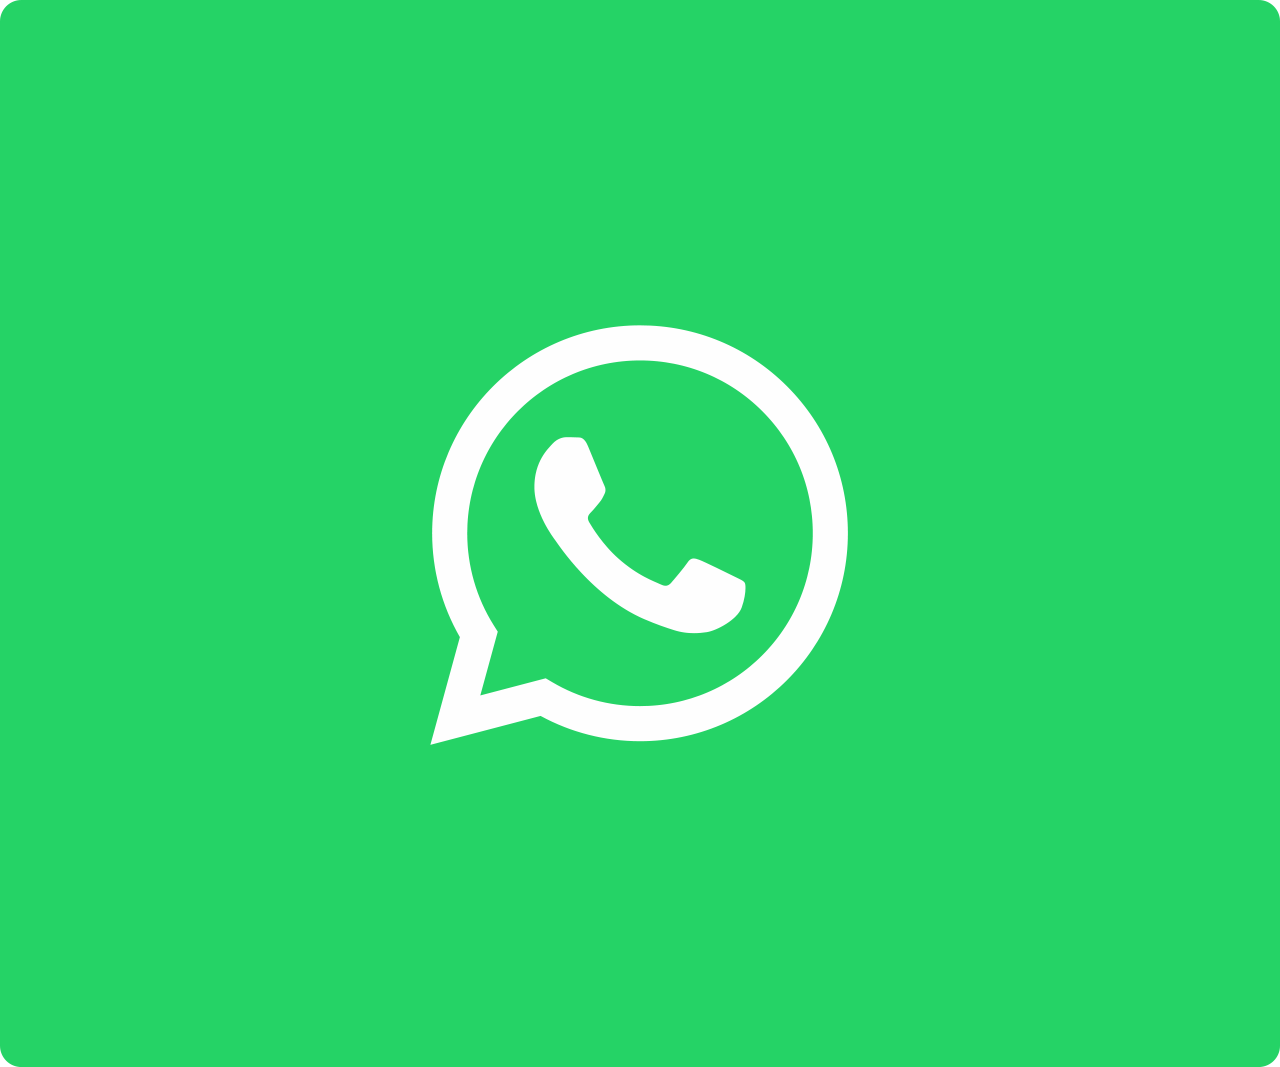 WhatsApp_Logo_2.png